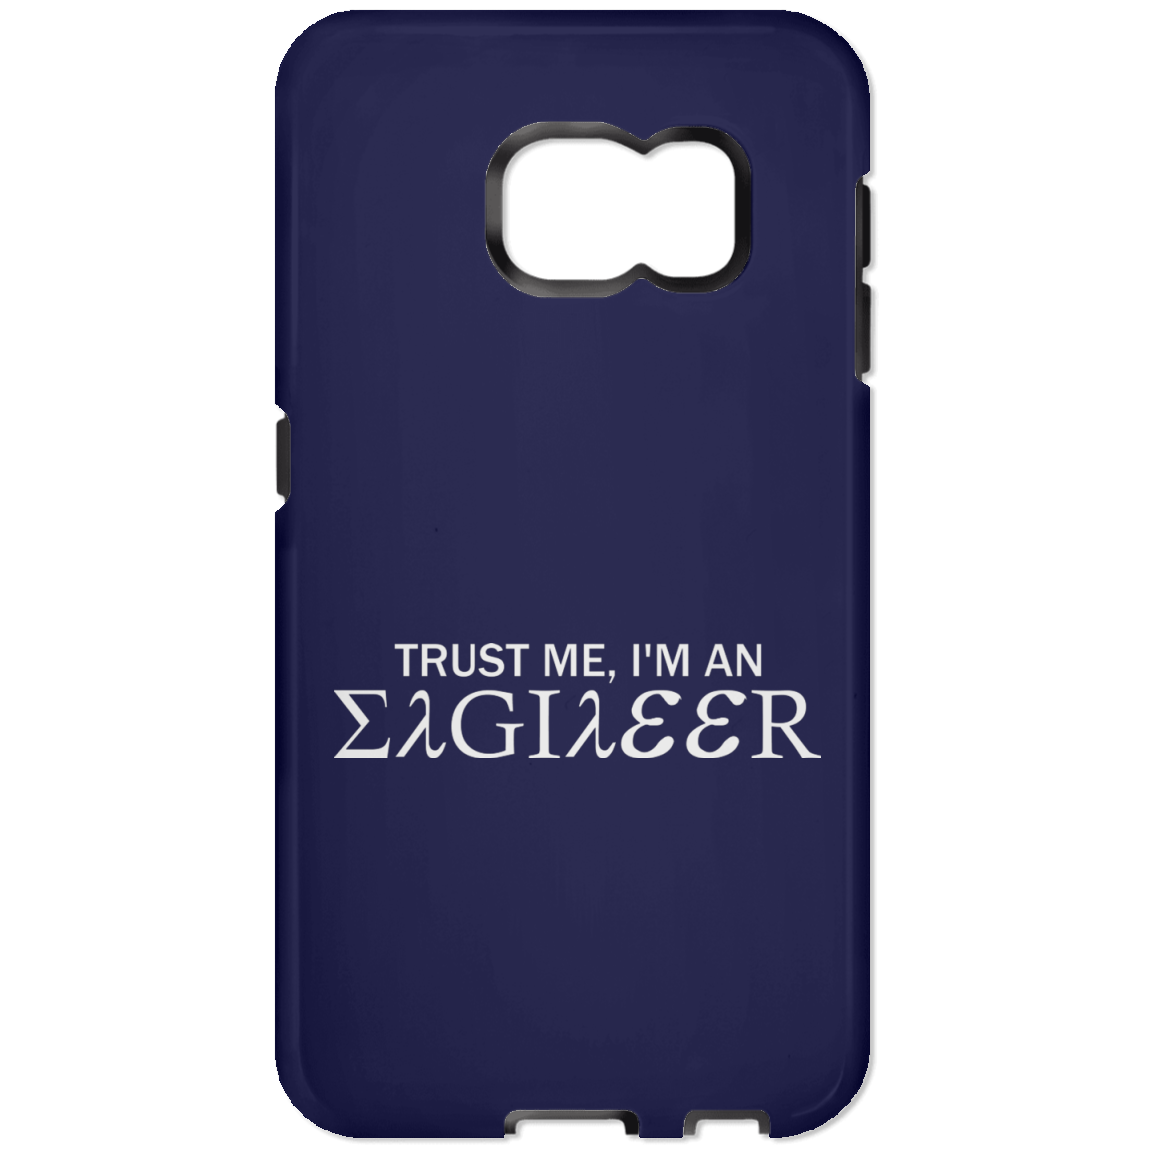 Trust Me, I'm An Engineer - Symbols (Phone Case)